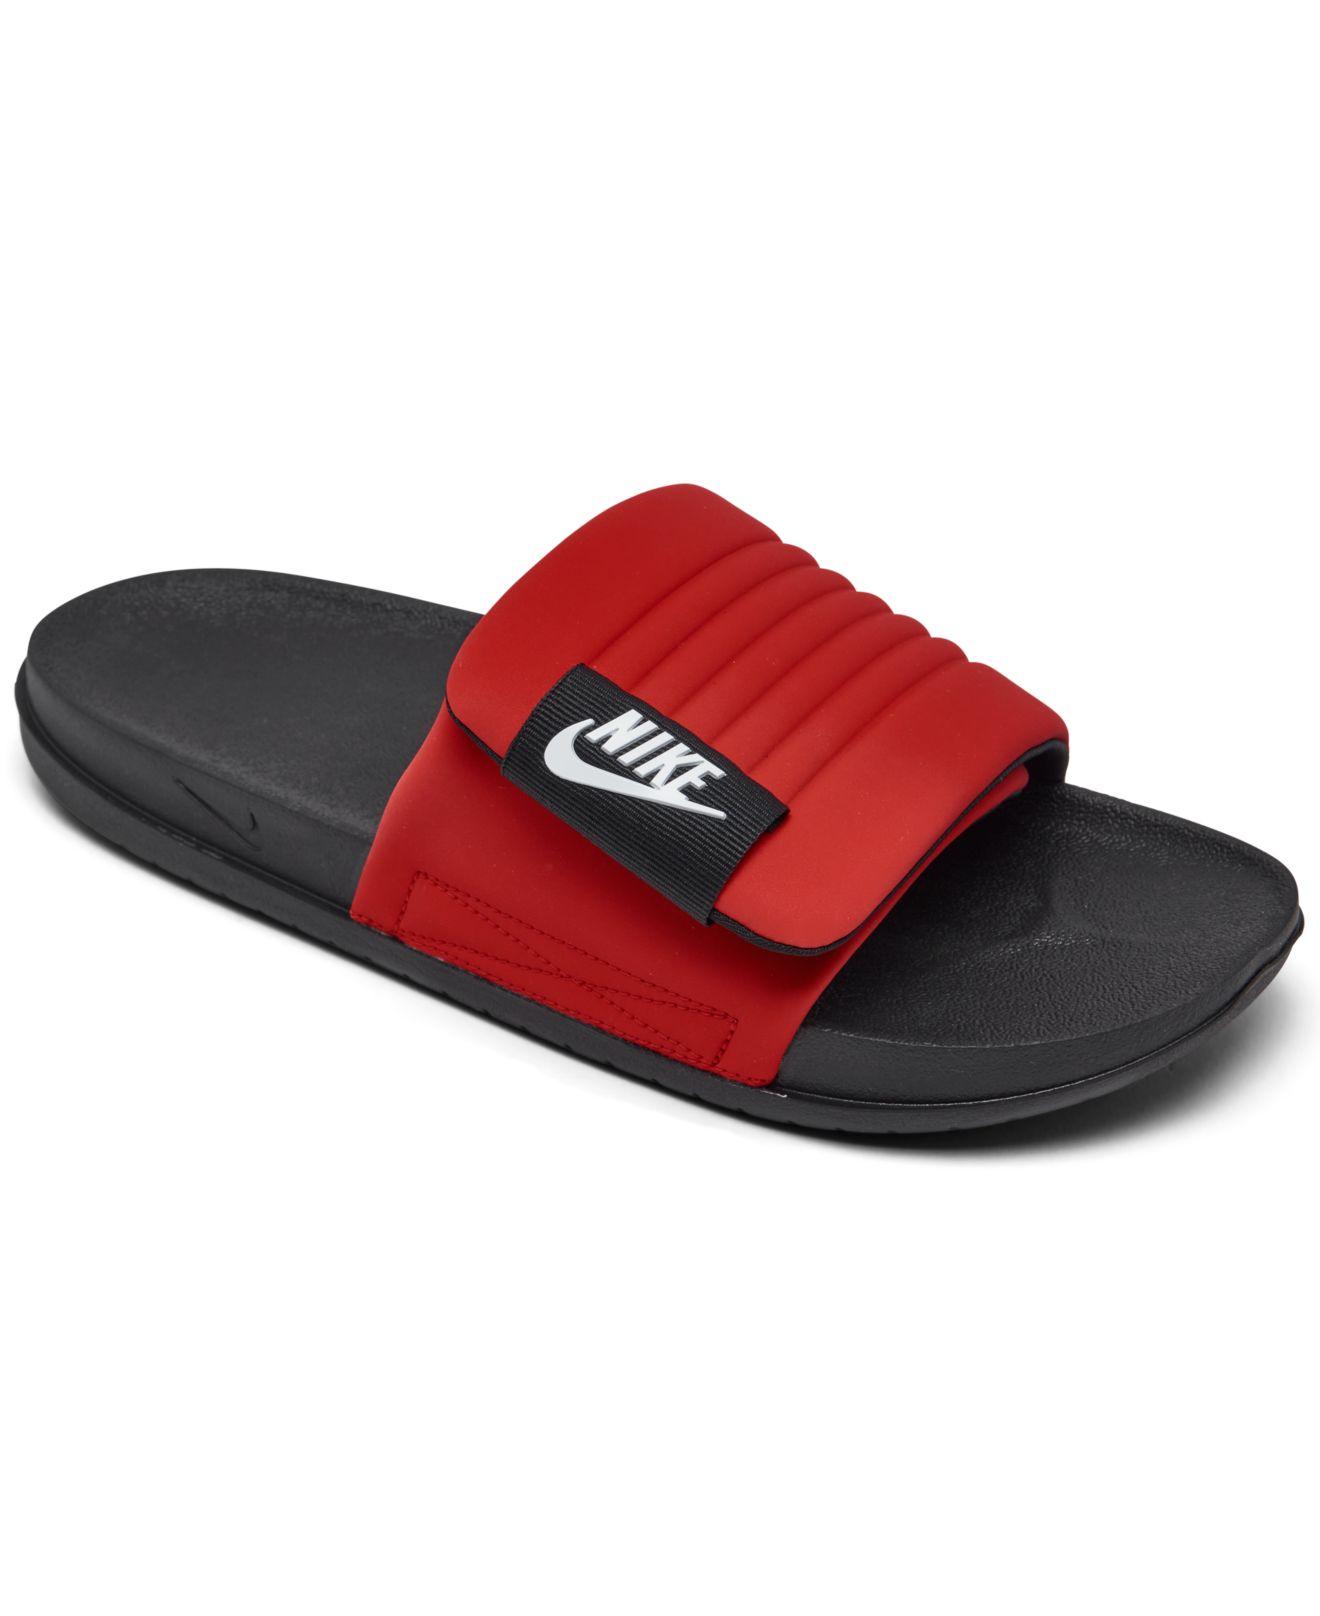 Nike Offcourt Adjust Slide Sandals From Finish Line in Red for Men